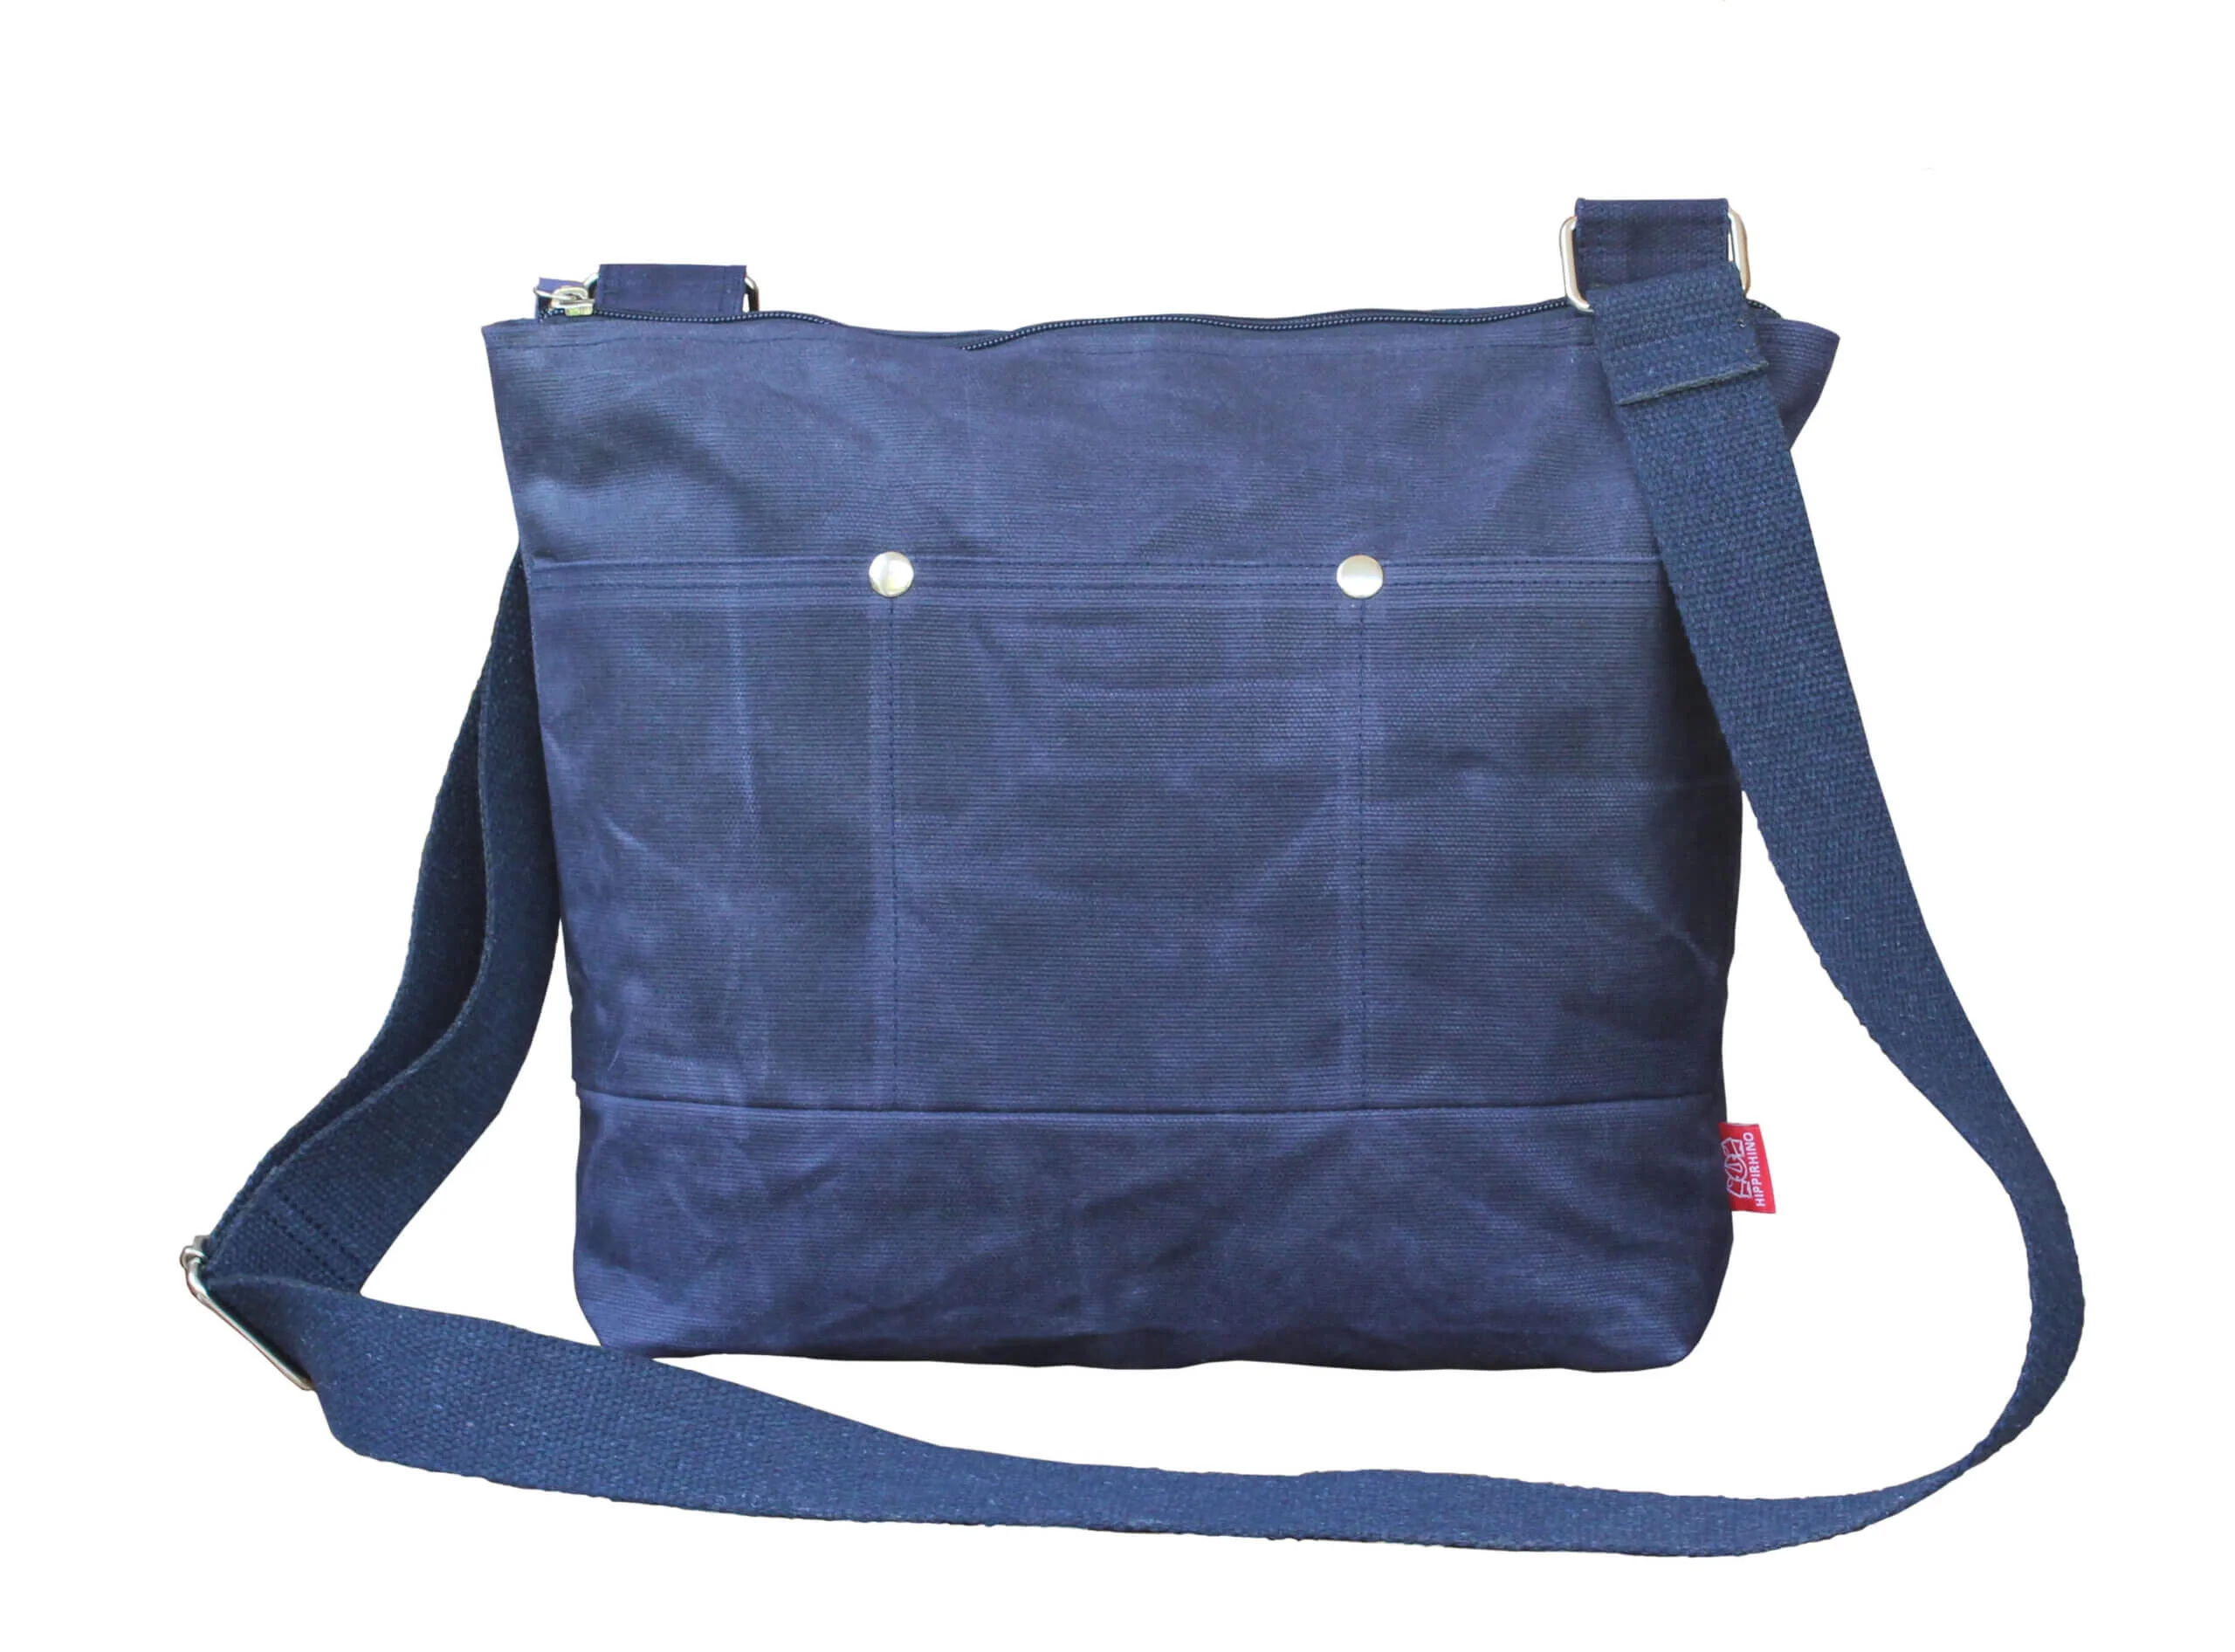 Navy Blue Crossbody Bag Everyday Favorite Easy Women's Purse w/ Removable  Strap | eBay